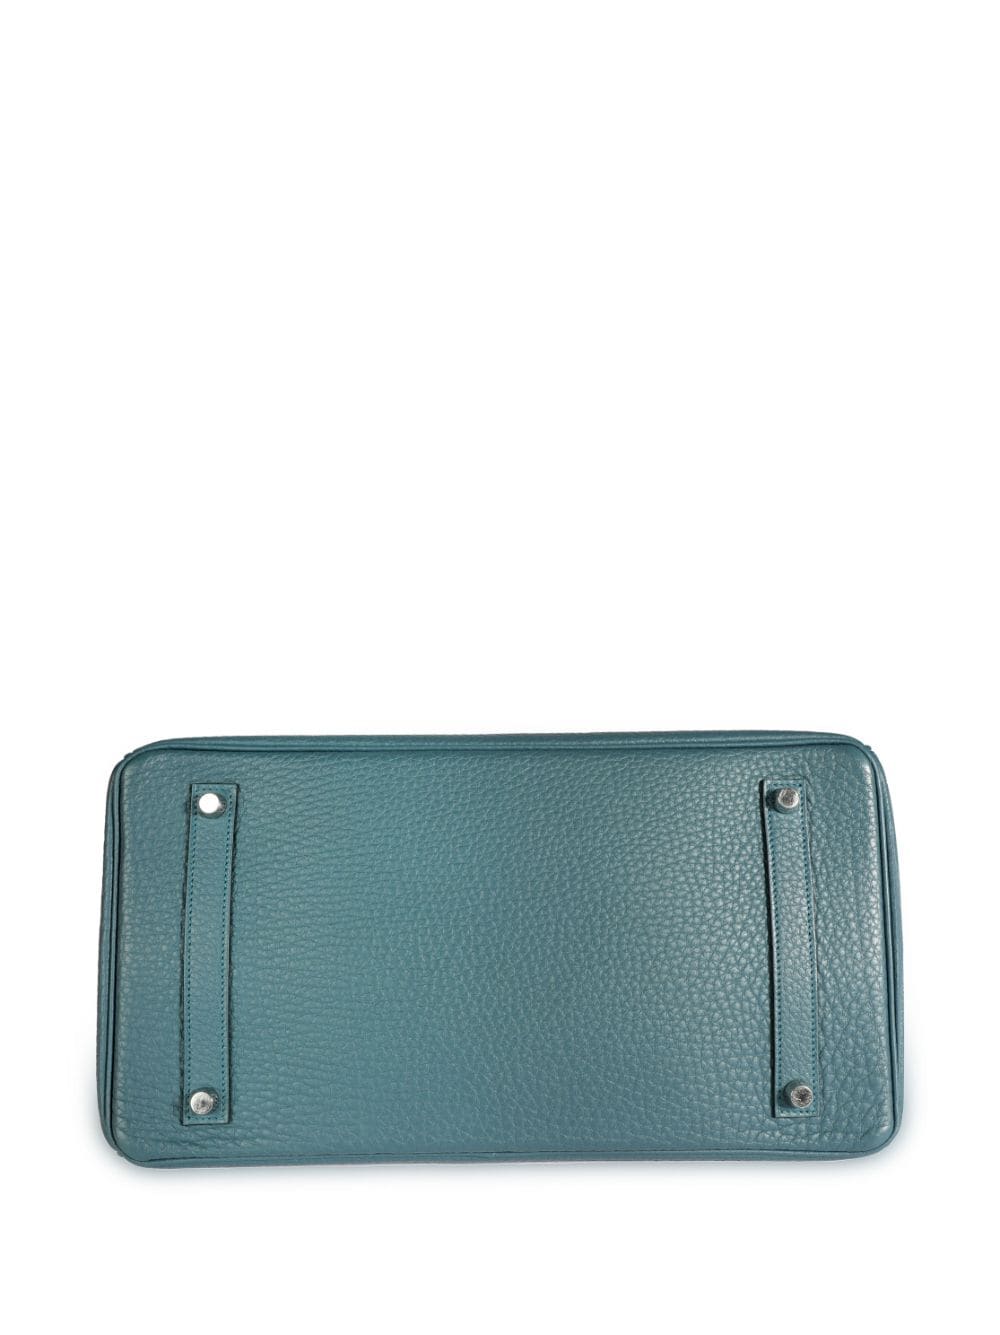 Hermès 2013 Birkin 35 Handbag